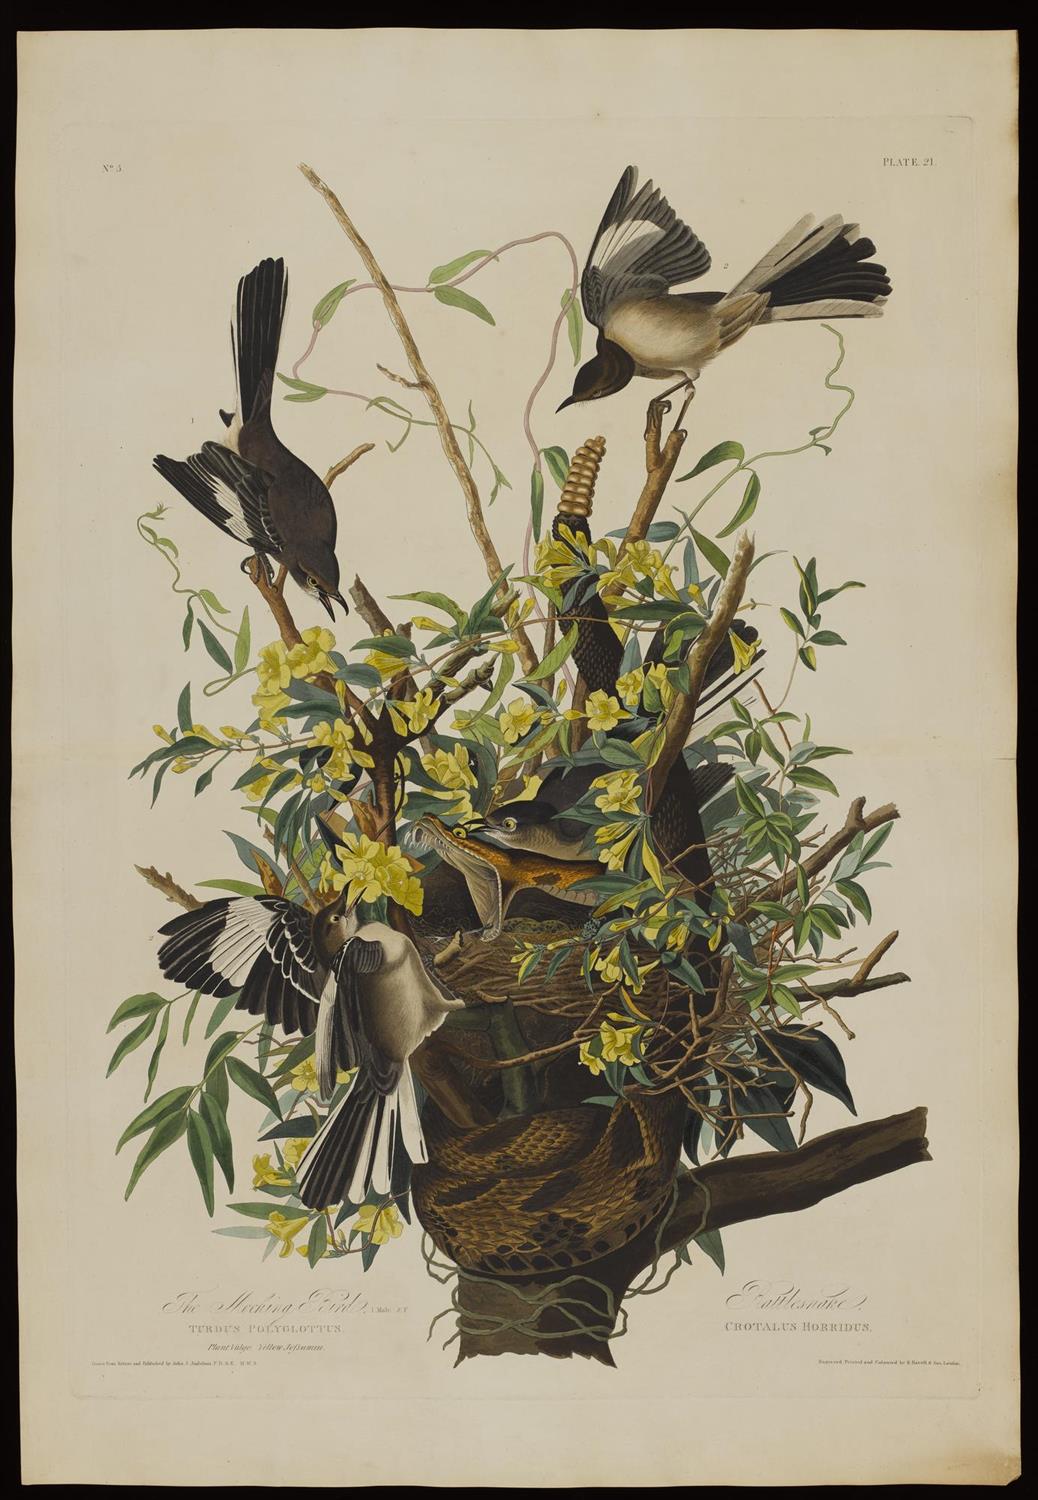 Mocking bird, Birds of America Plates, by John James Audubon.